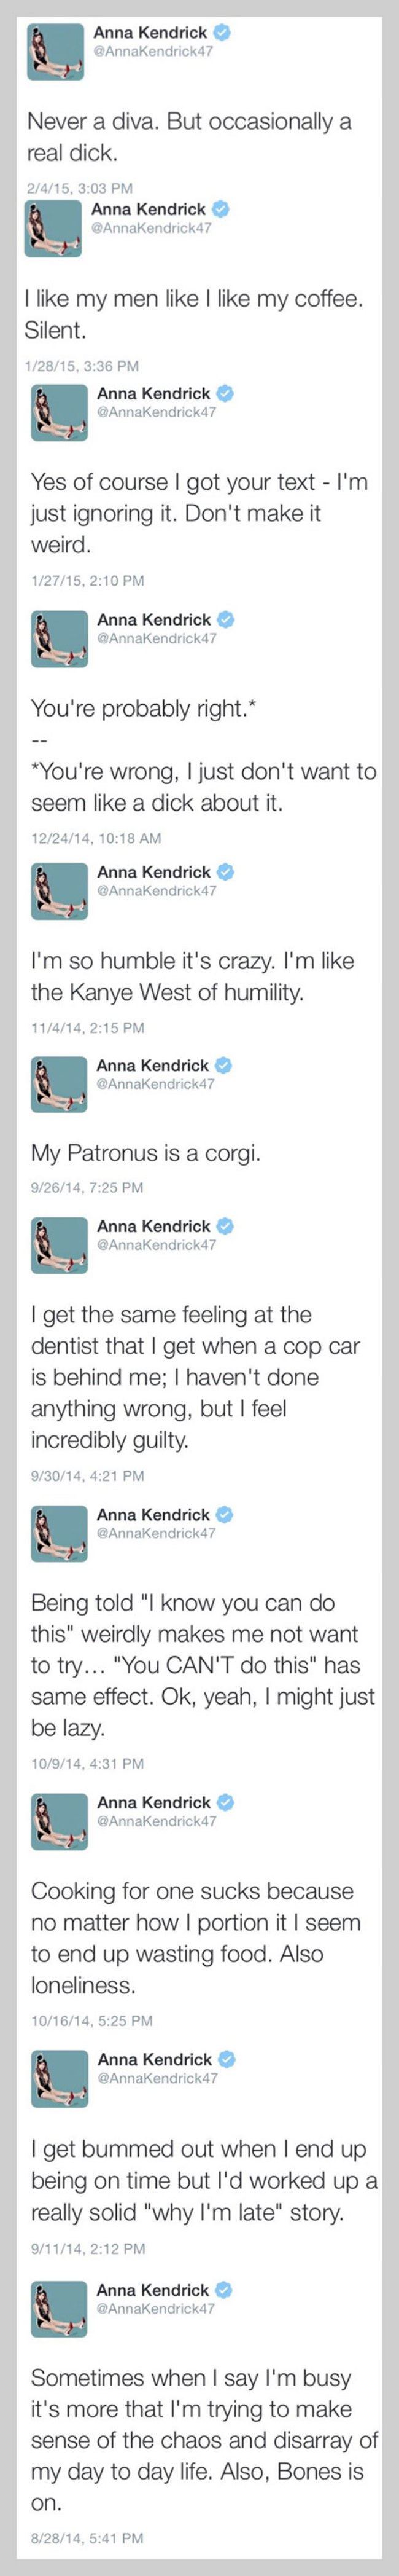 Anna Kendrick Twitter